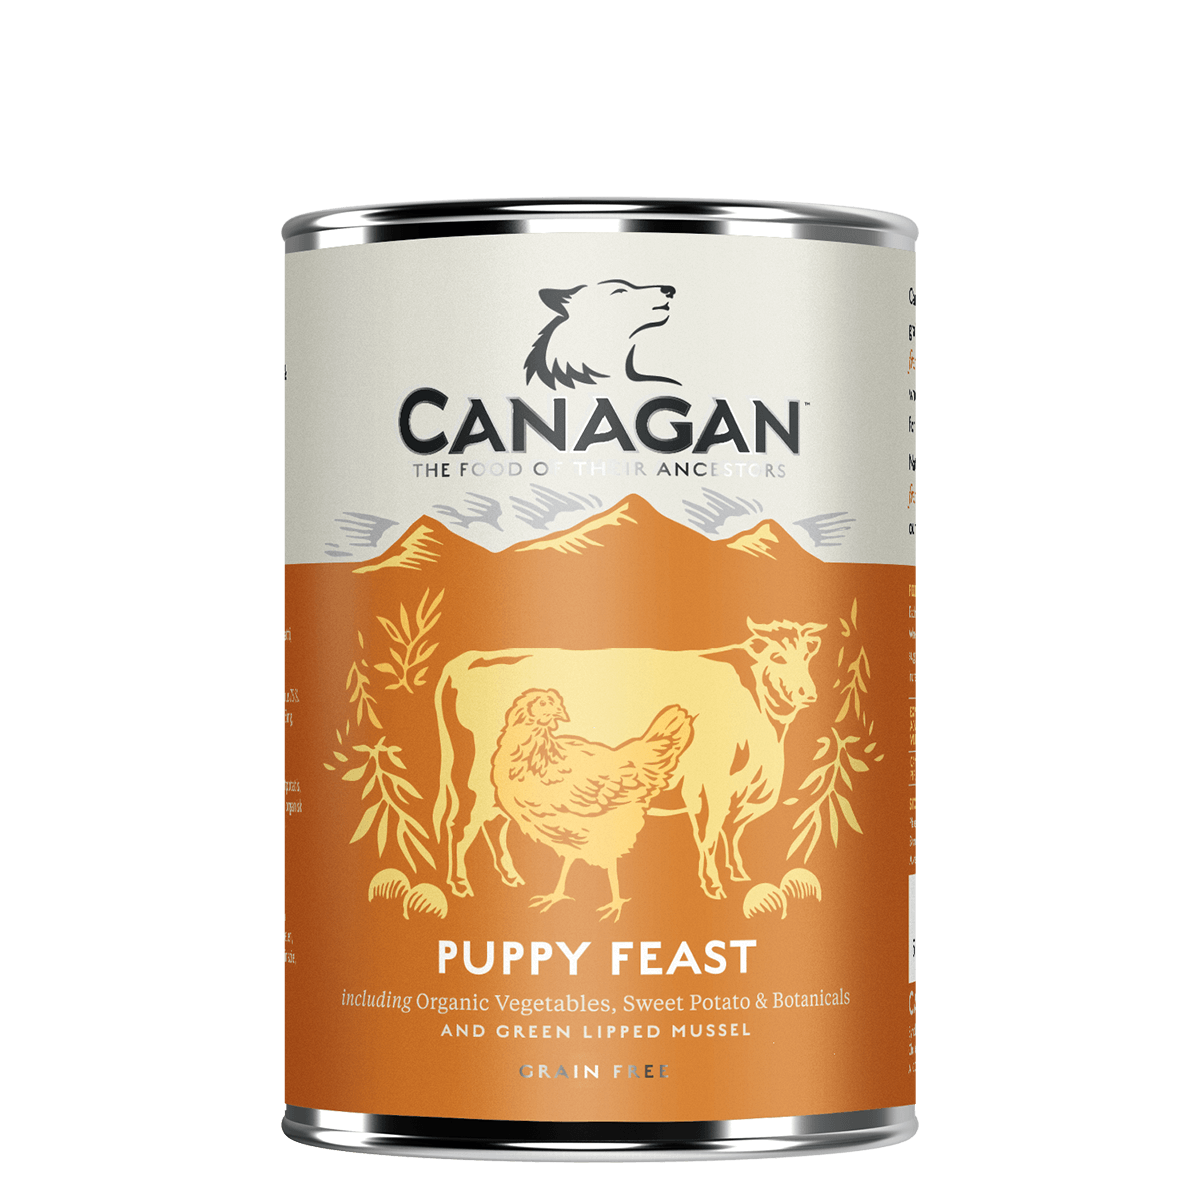 Canagan grain free wet dog food